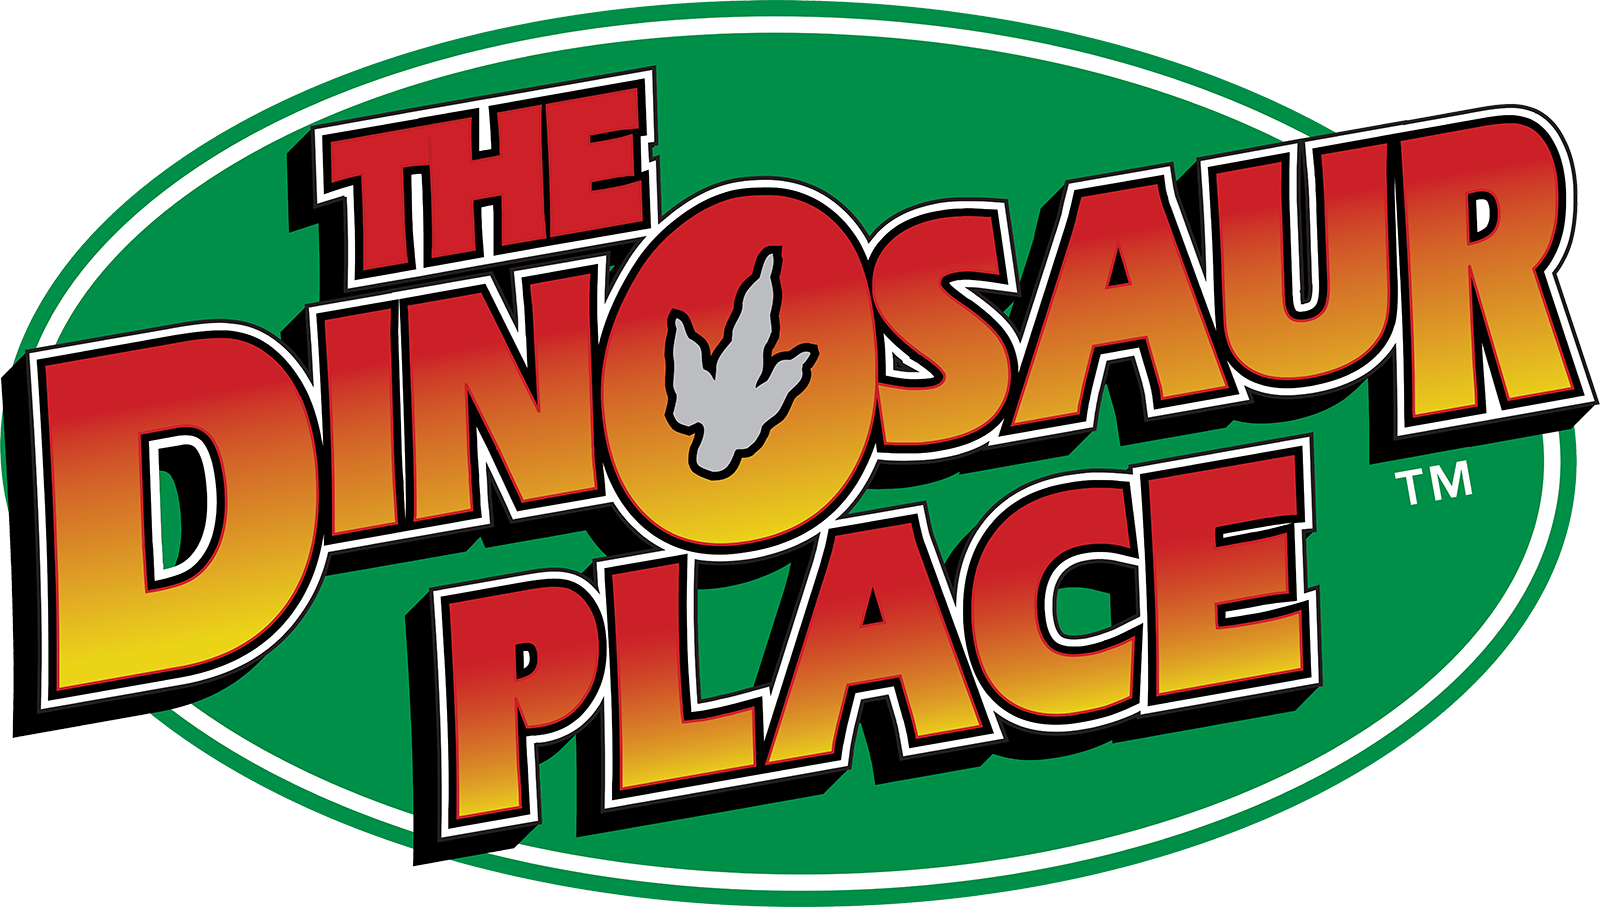 The Dinosaur Place